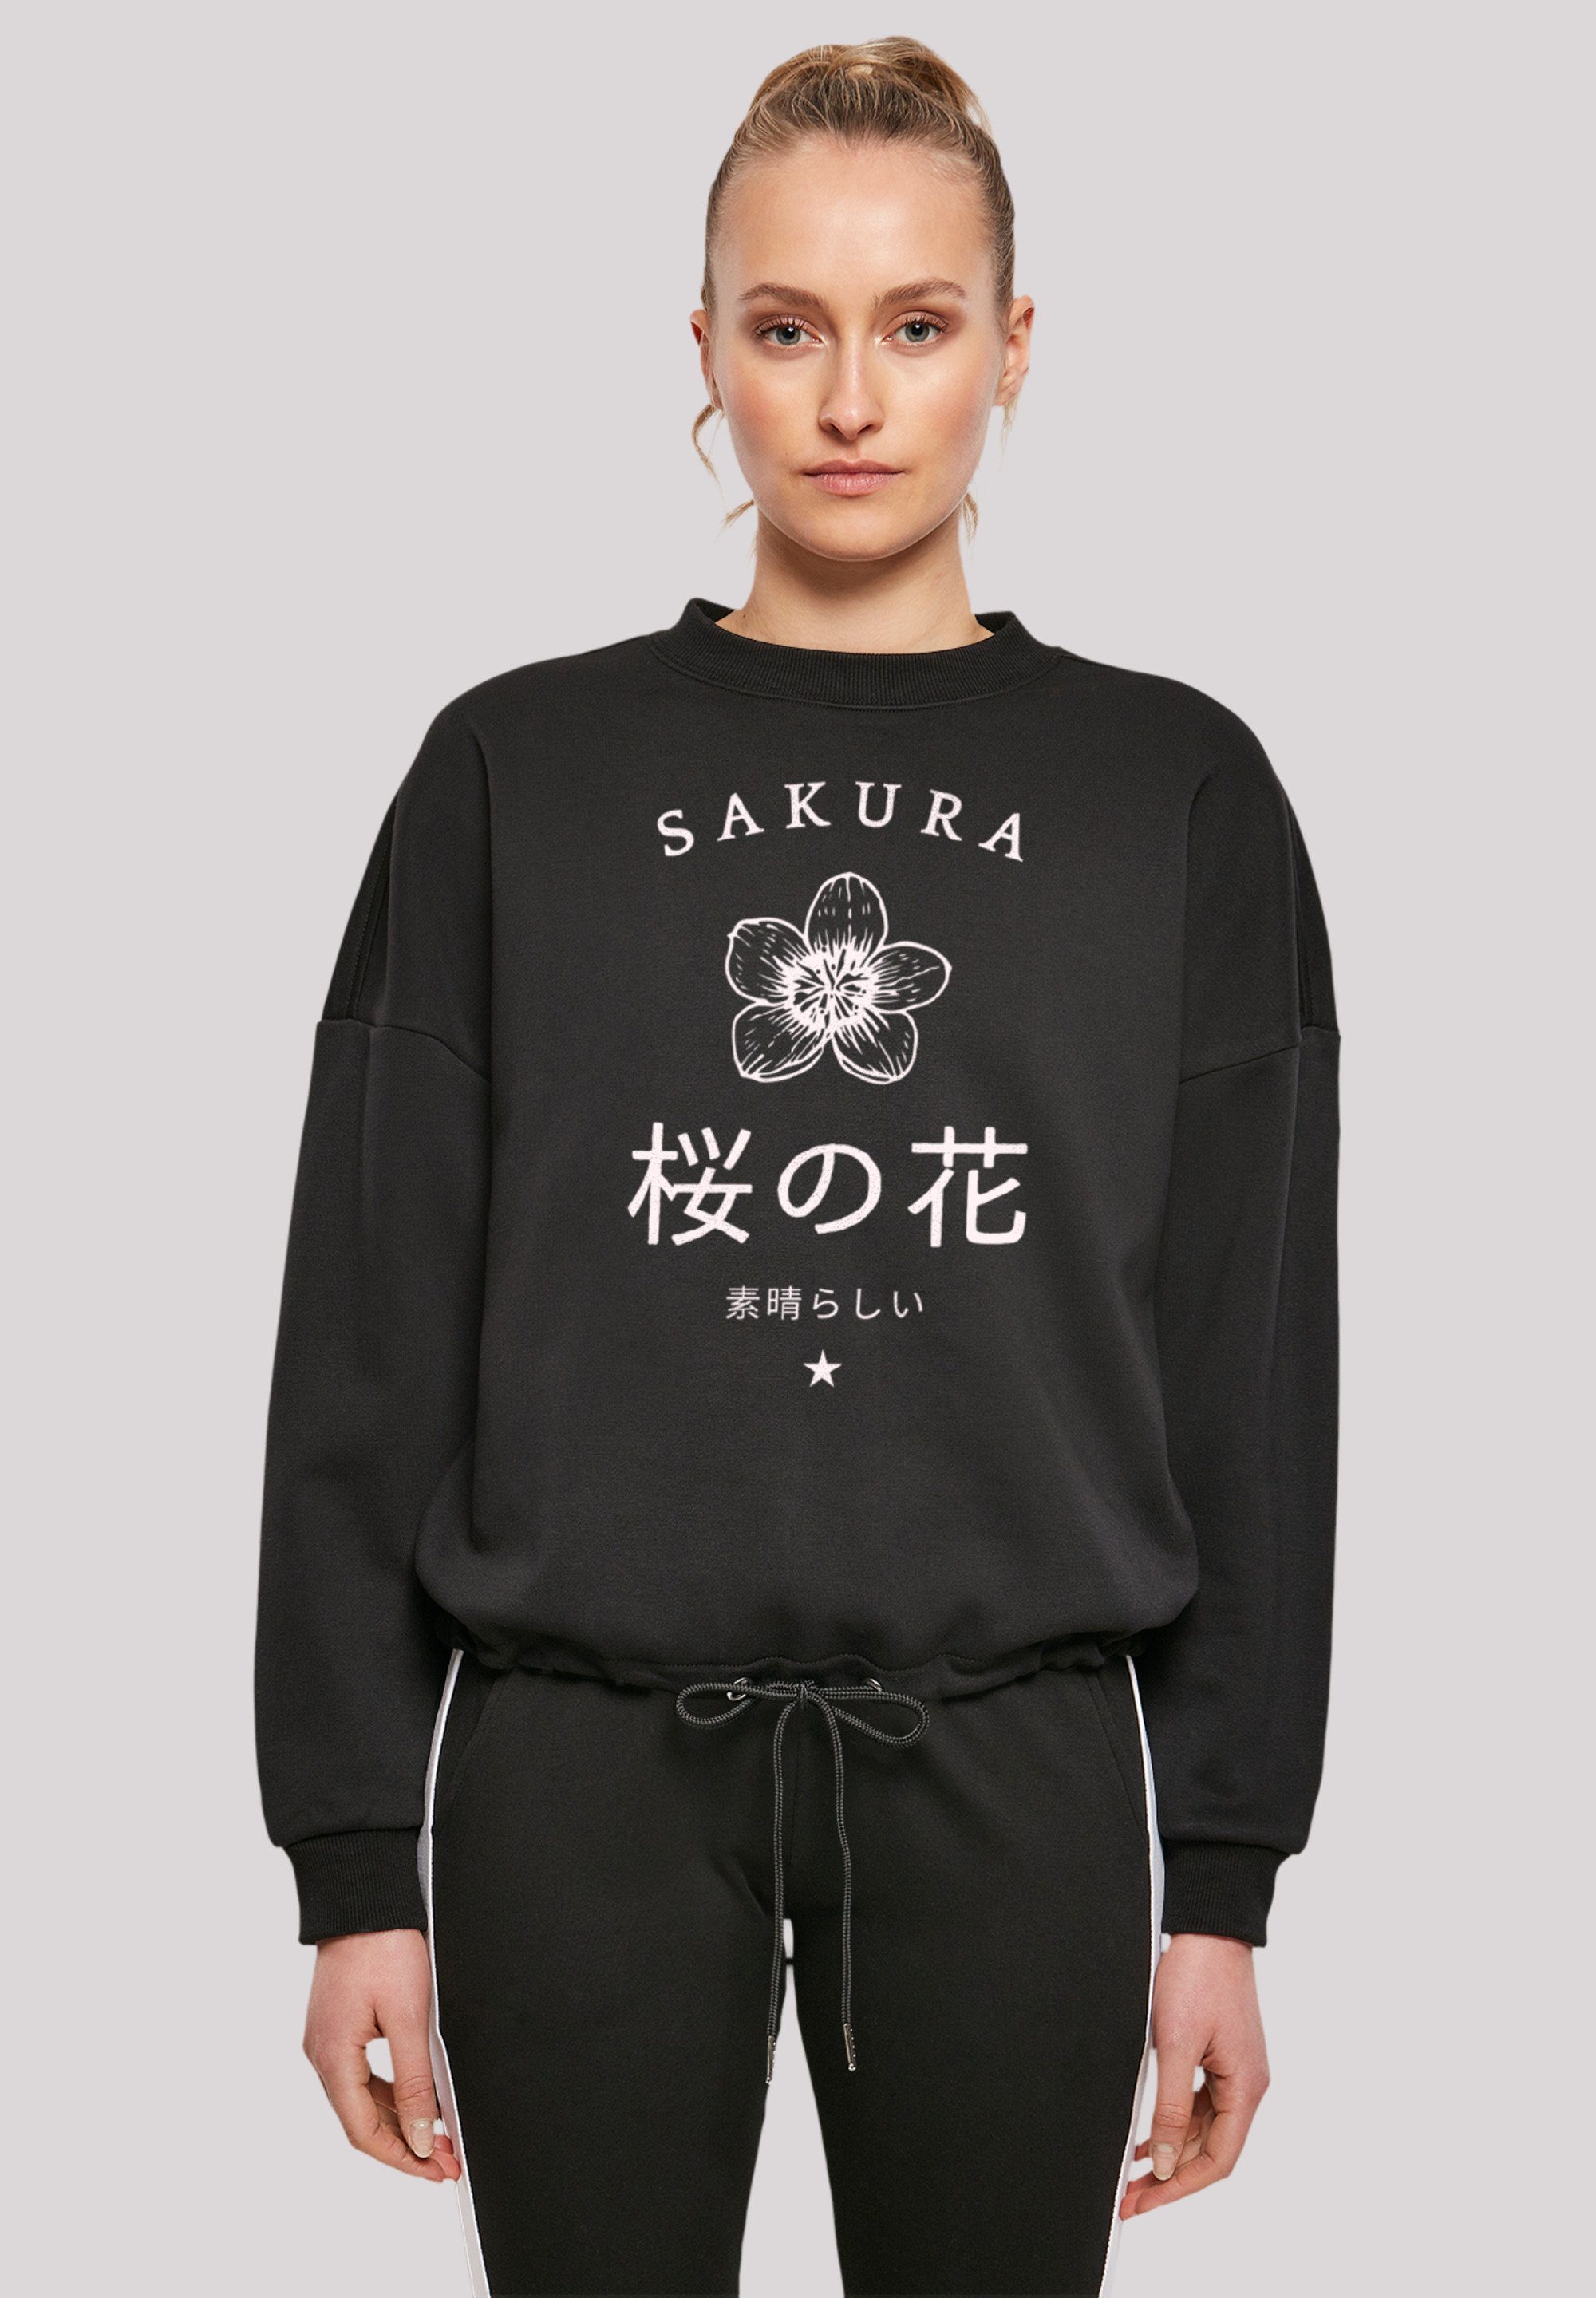 Print F4NT4STIC Japan Blume Sakura Sweatshirt schwarz